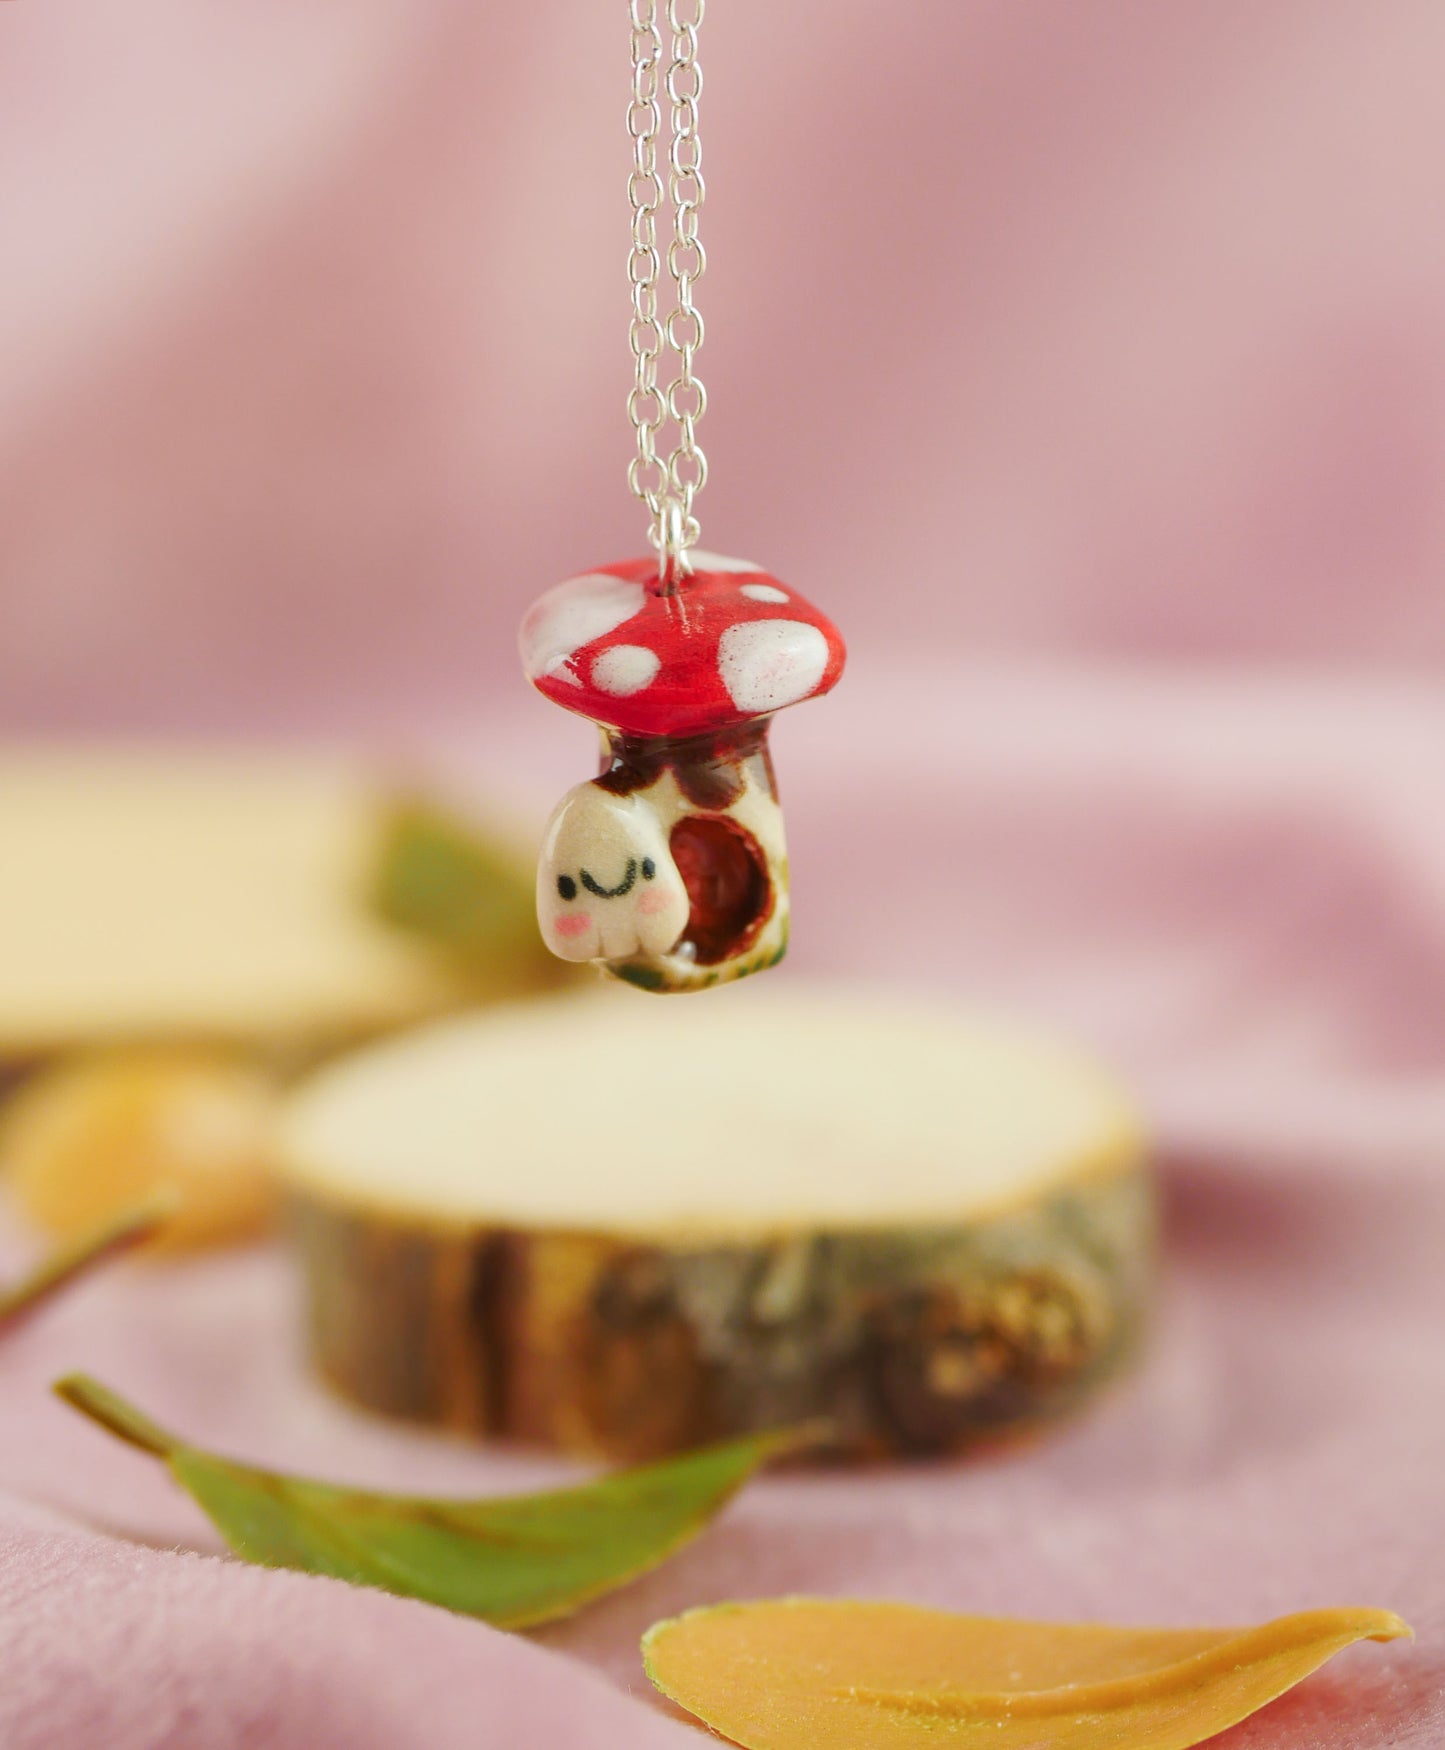 Mini Mushroom pendant and chain